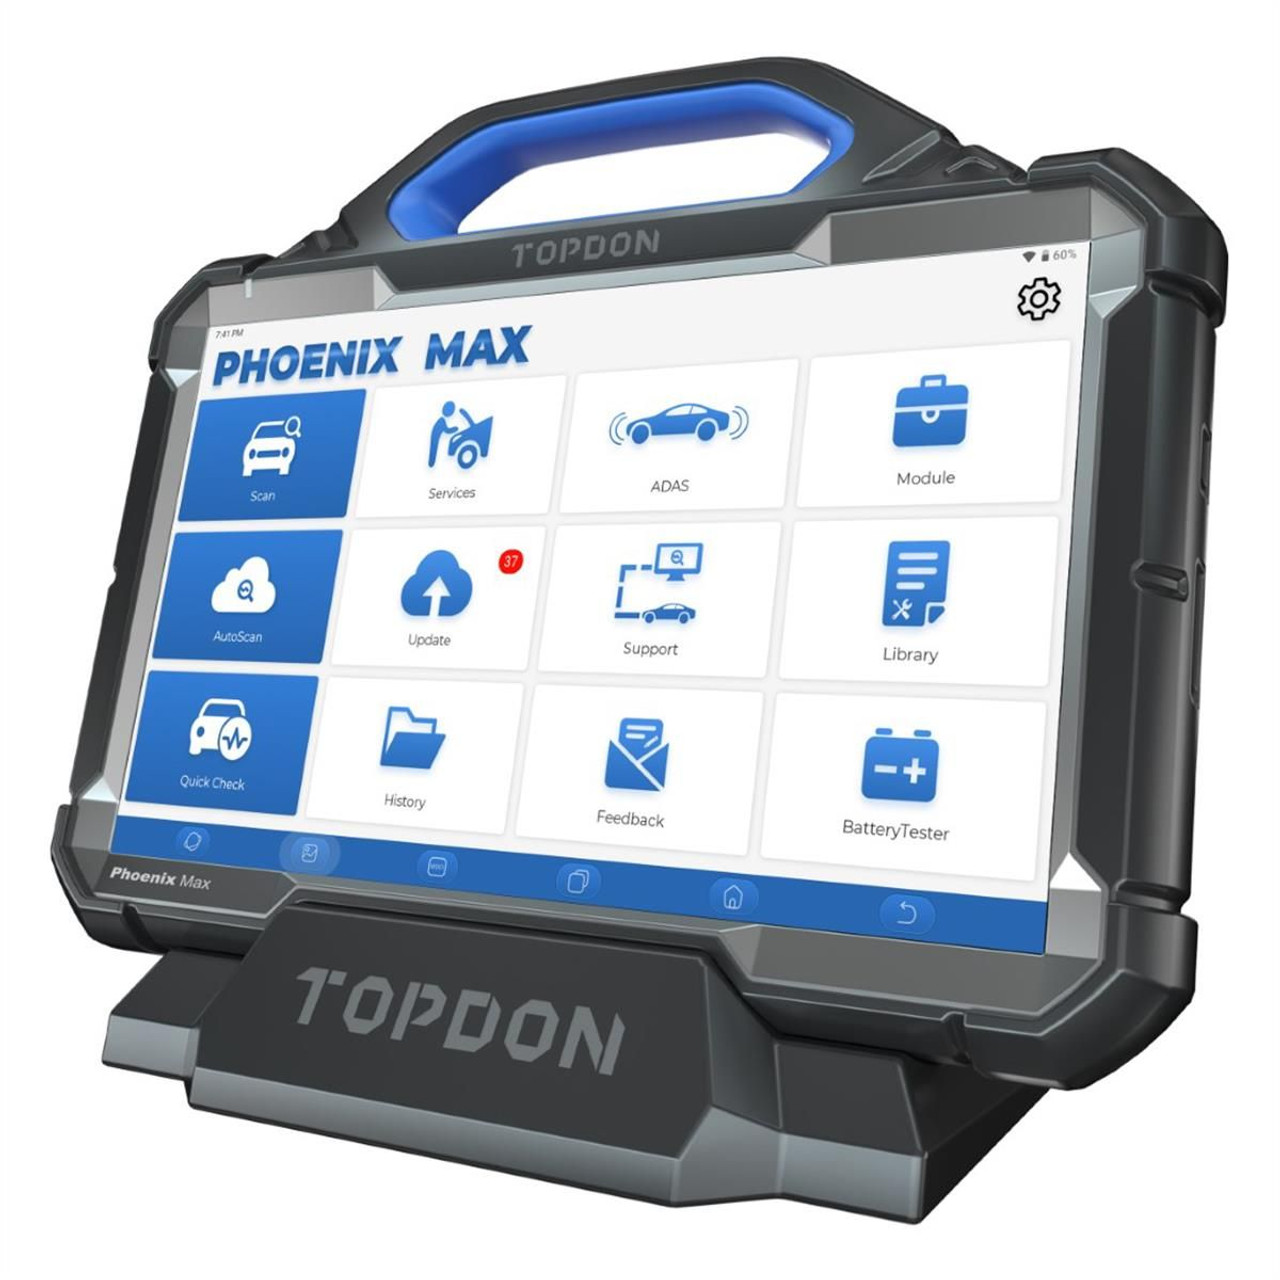 TOPDON Phoenix Max - 13.3" OE-Level Scan Tool, Docking Station, Cloud-Based Programming (TOPTD52110063)